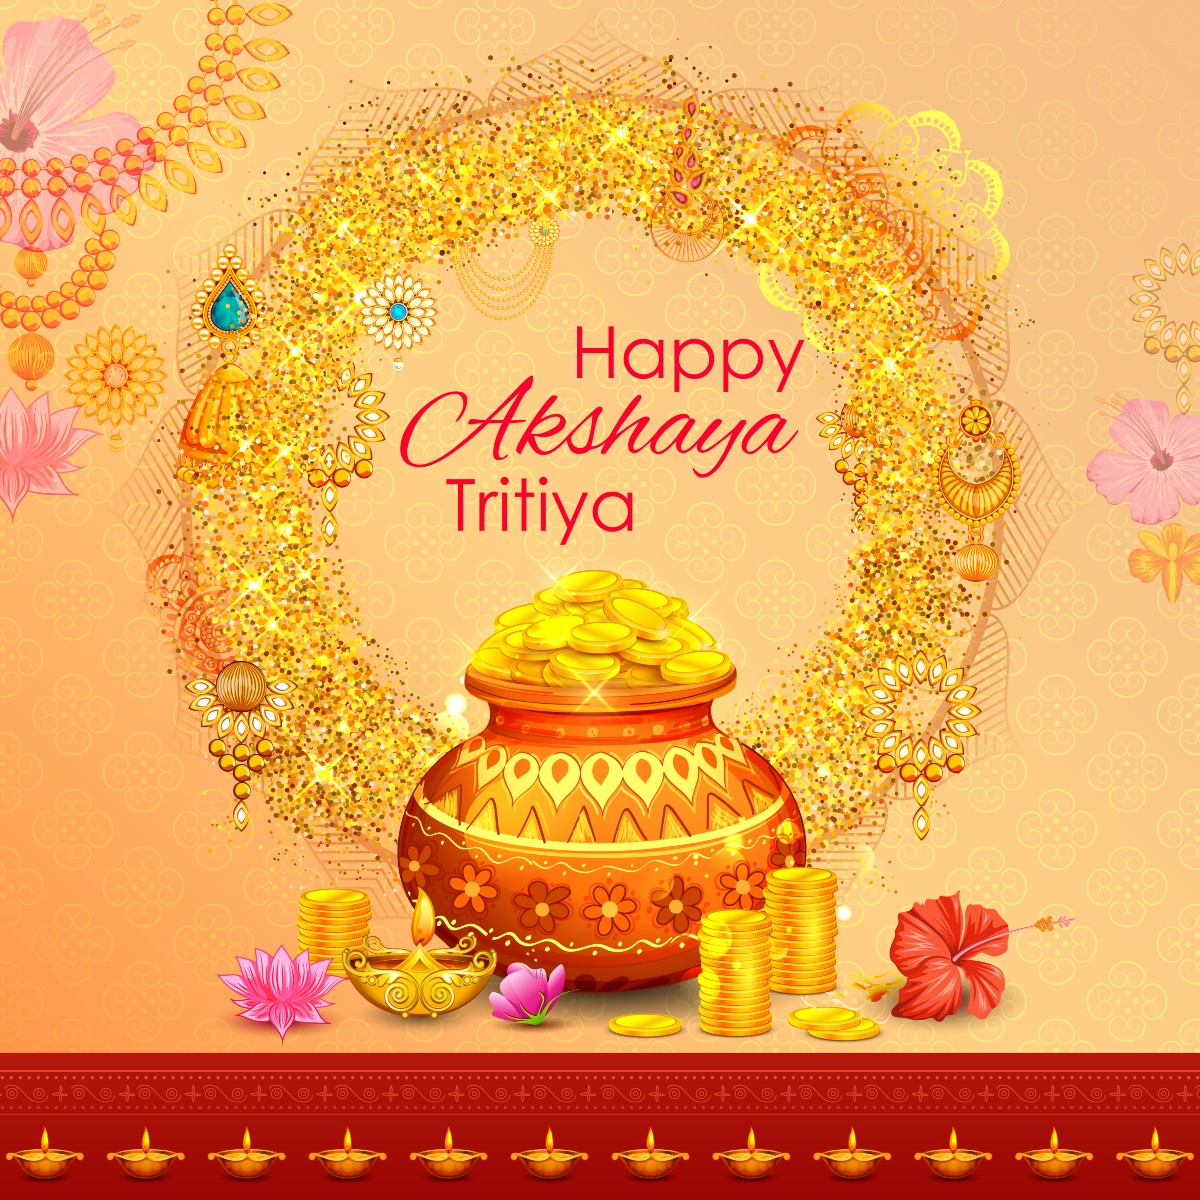 Happy Akshaya Tritiya 2022 Wishes, Images, Status, Quotes, Messages